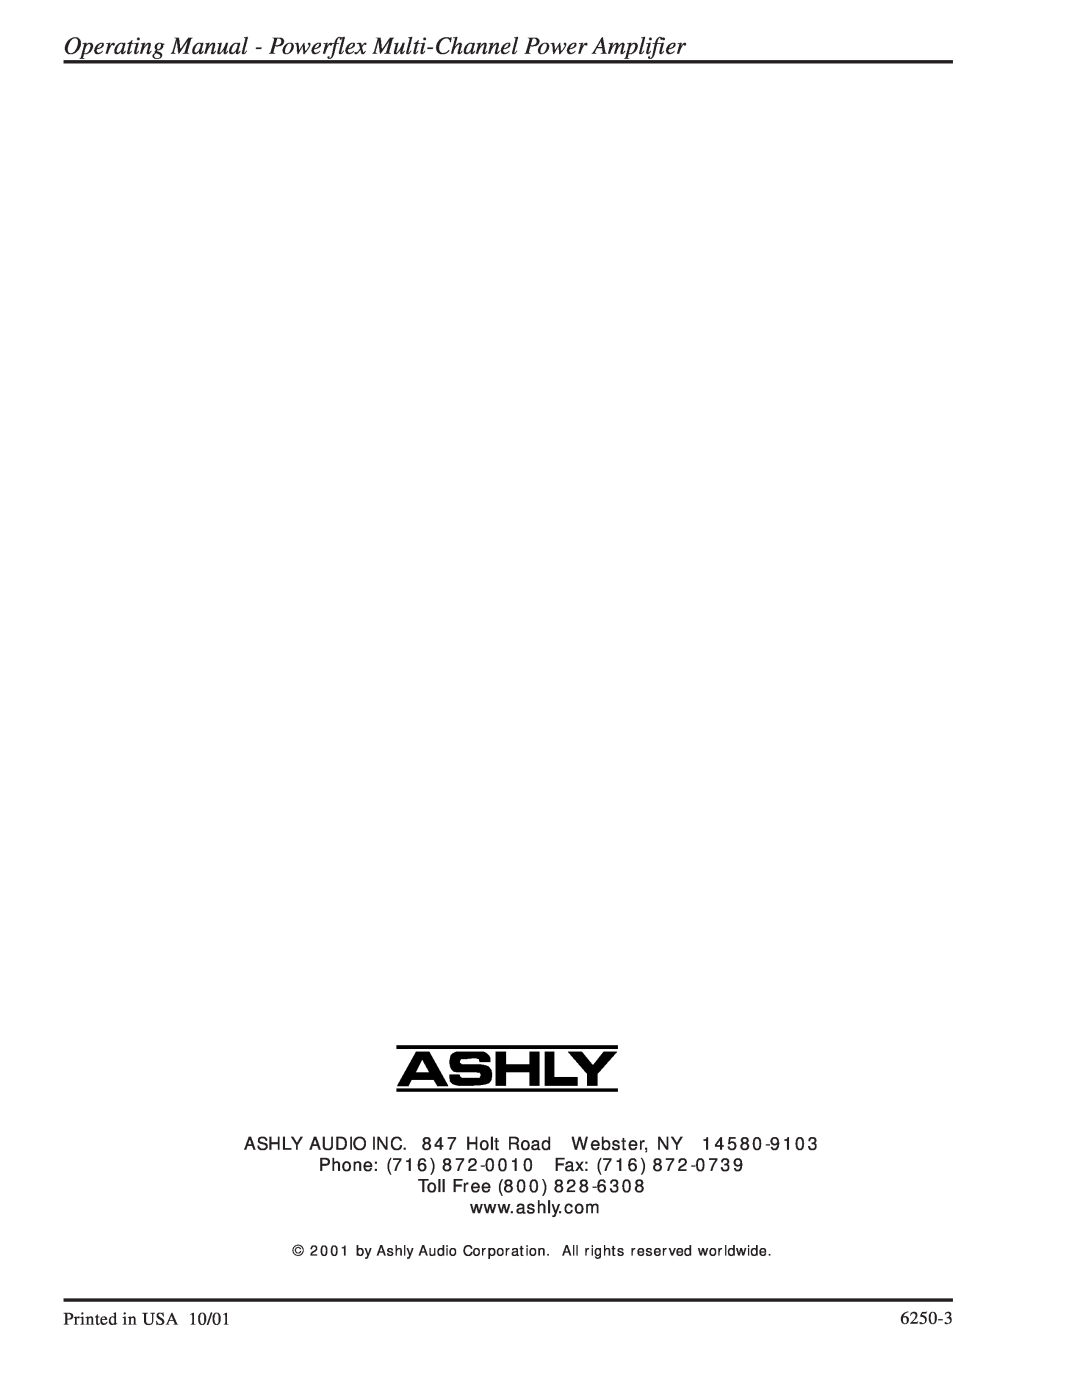 Ashly TRA-4150 manual ASHLY AUDIO INC. 847 Holt Road Webster, NY, Phone 716 872-0010Fax 716 Toll Free, 6250-3 